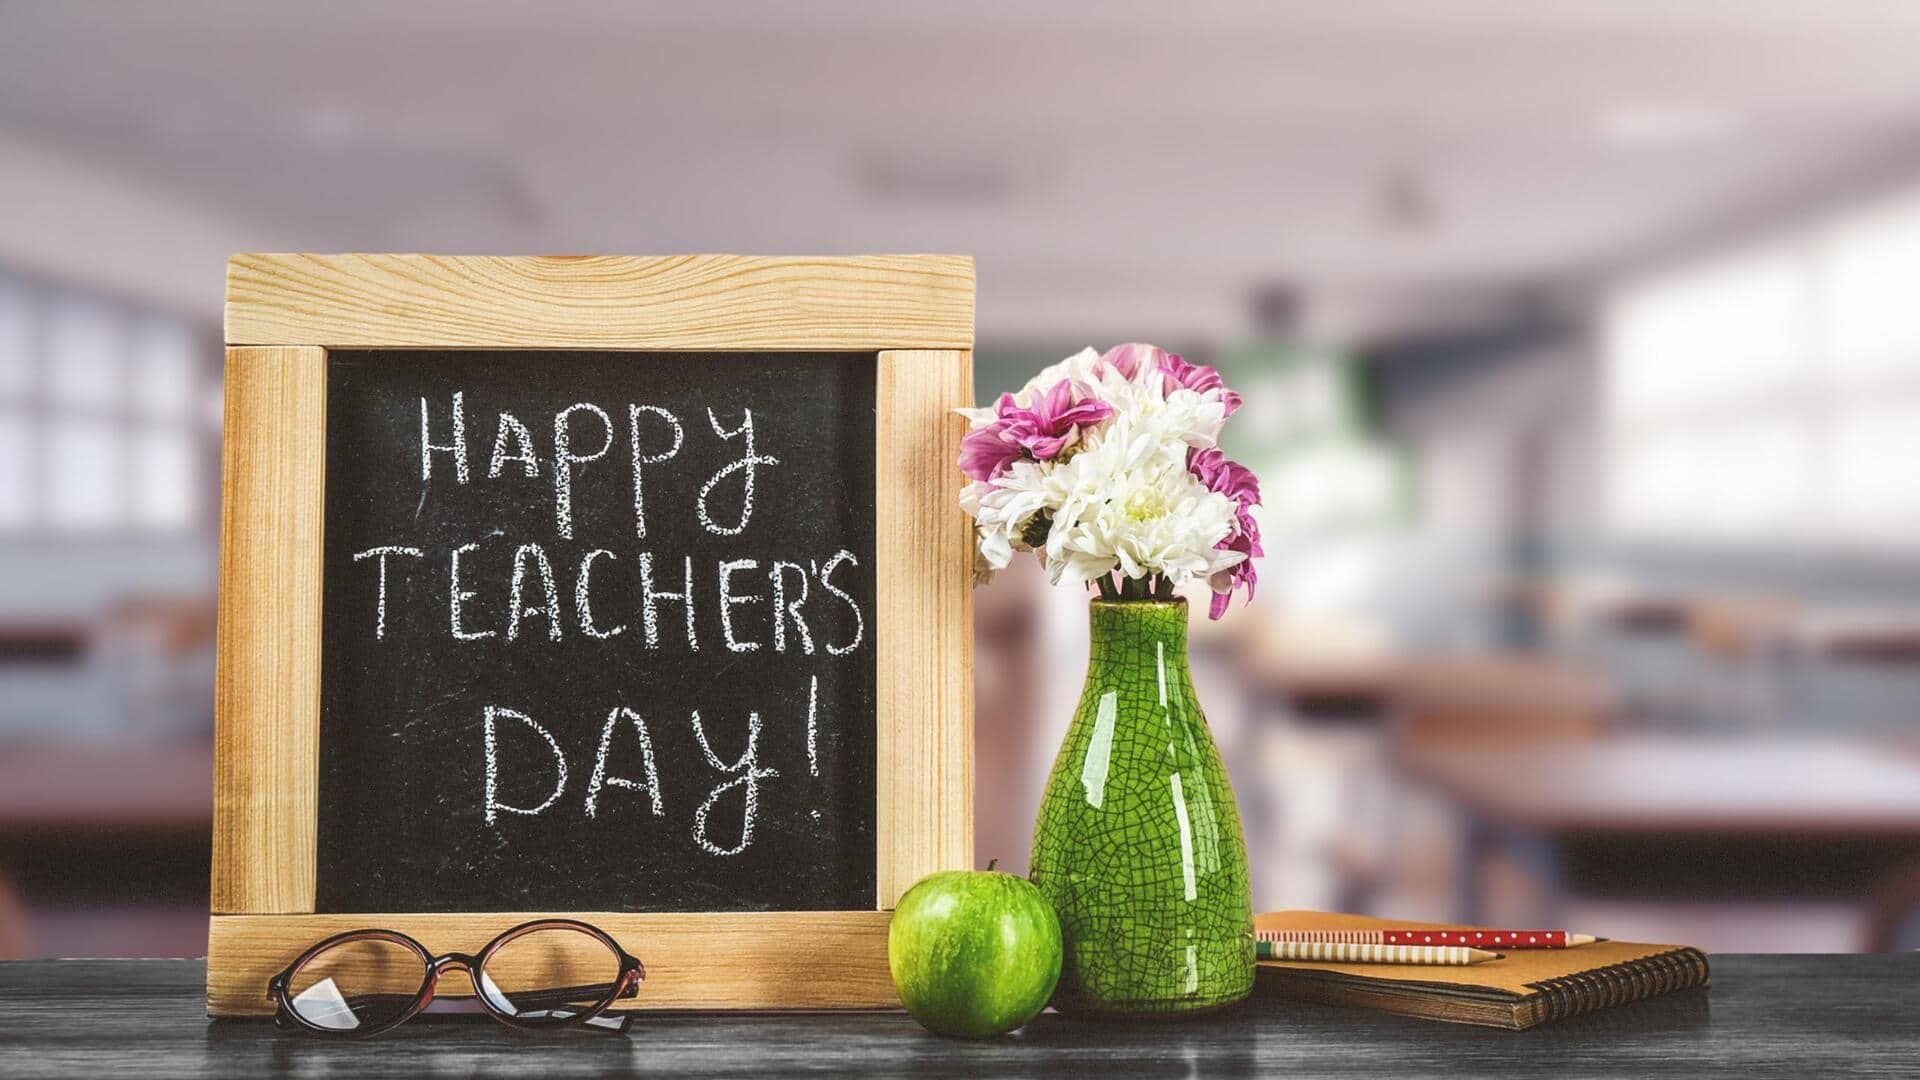 Express gratitude with these Teacher's Day classroom decor ideas